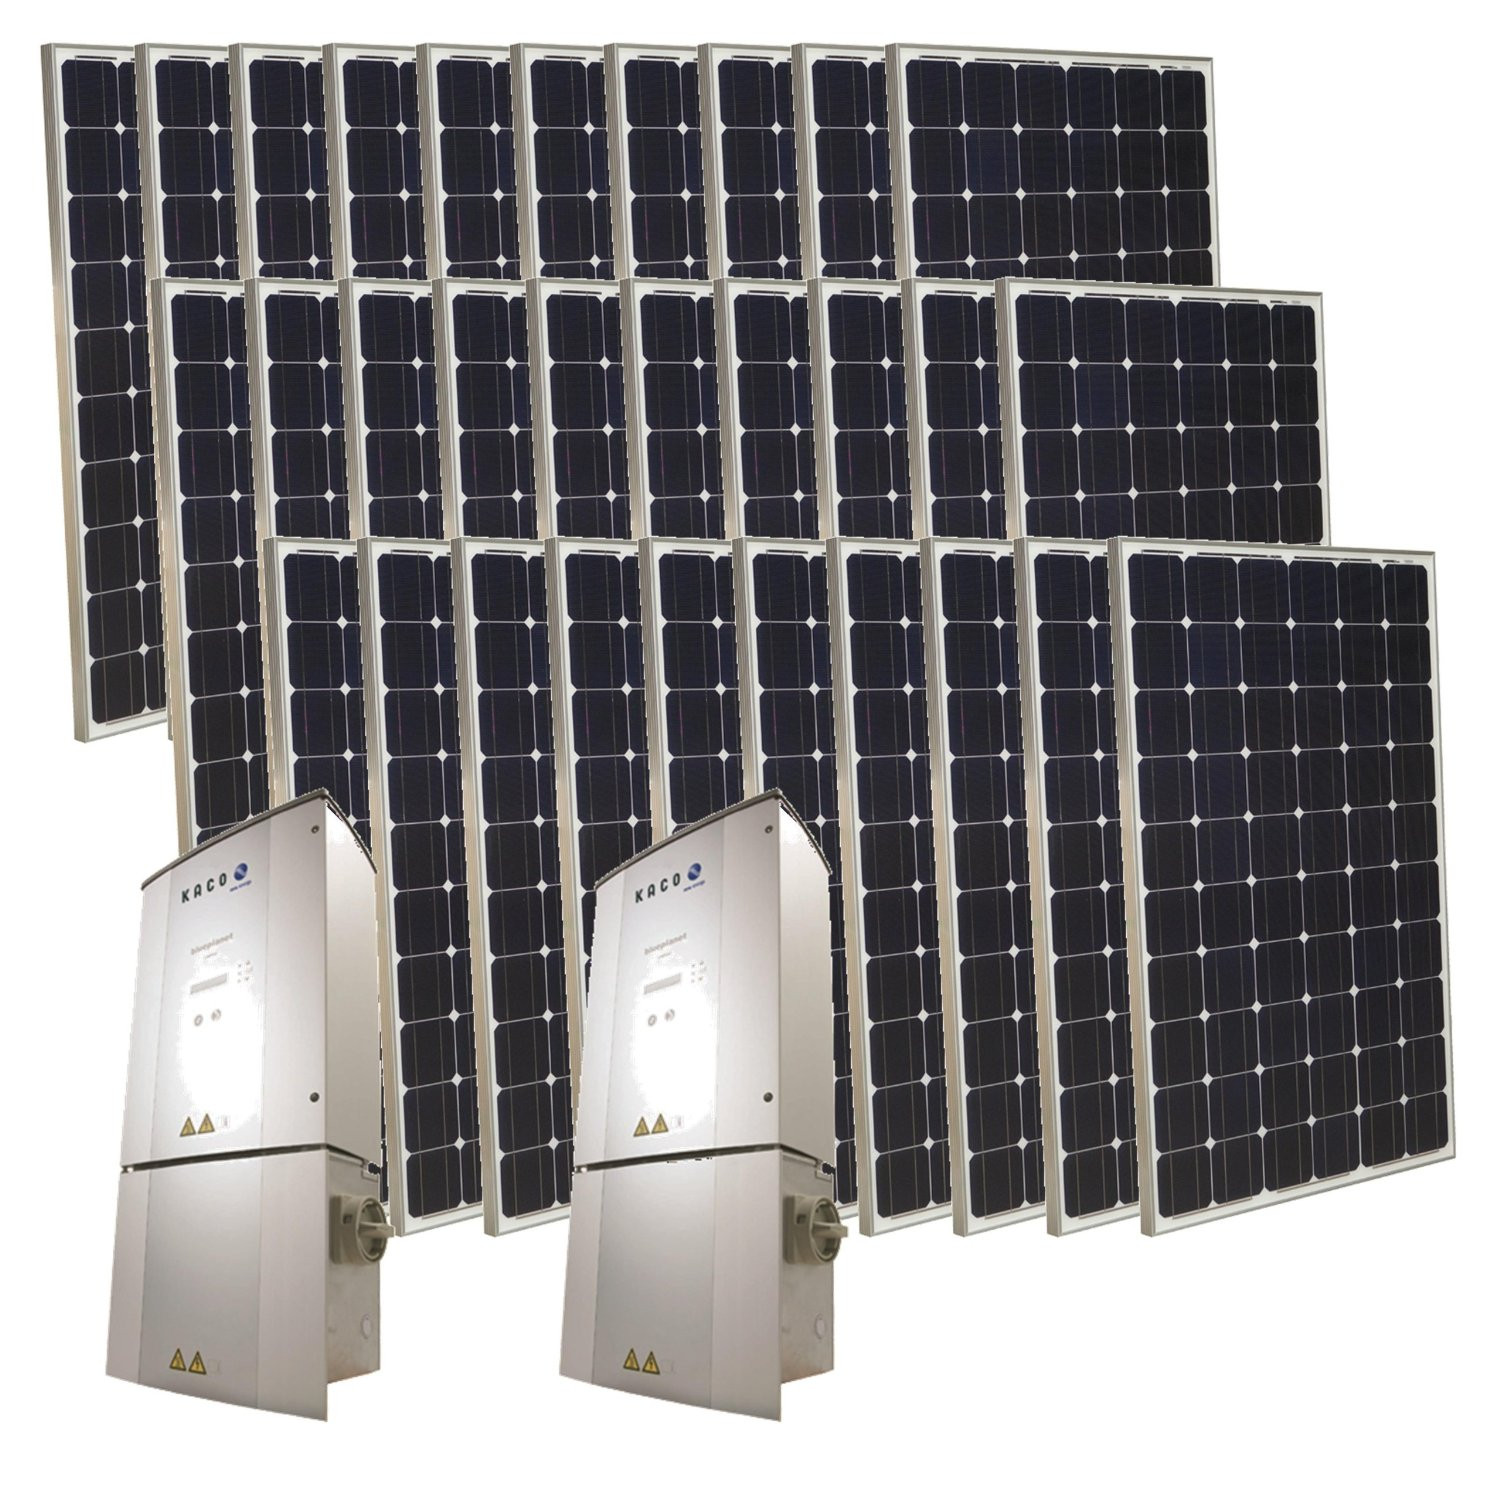 DIY Solar Panels Kits Home Use
 Try Home solar panel kits diy George Mayda